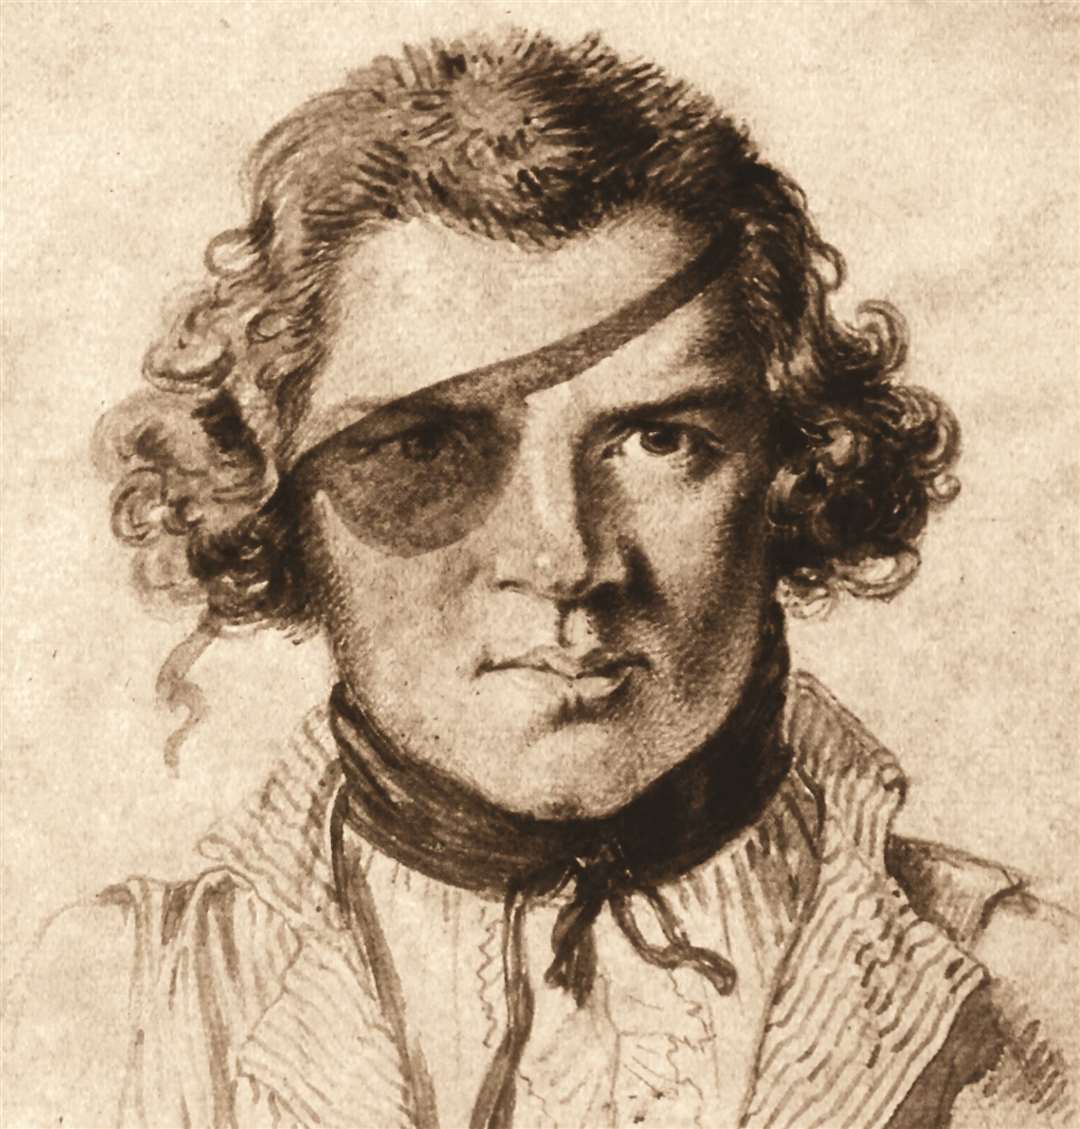 William Alexander's self portrait from 1793